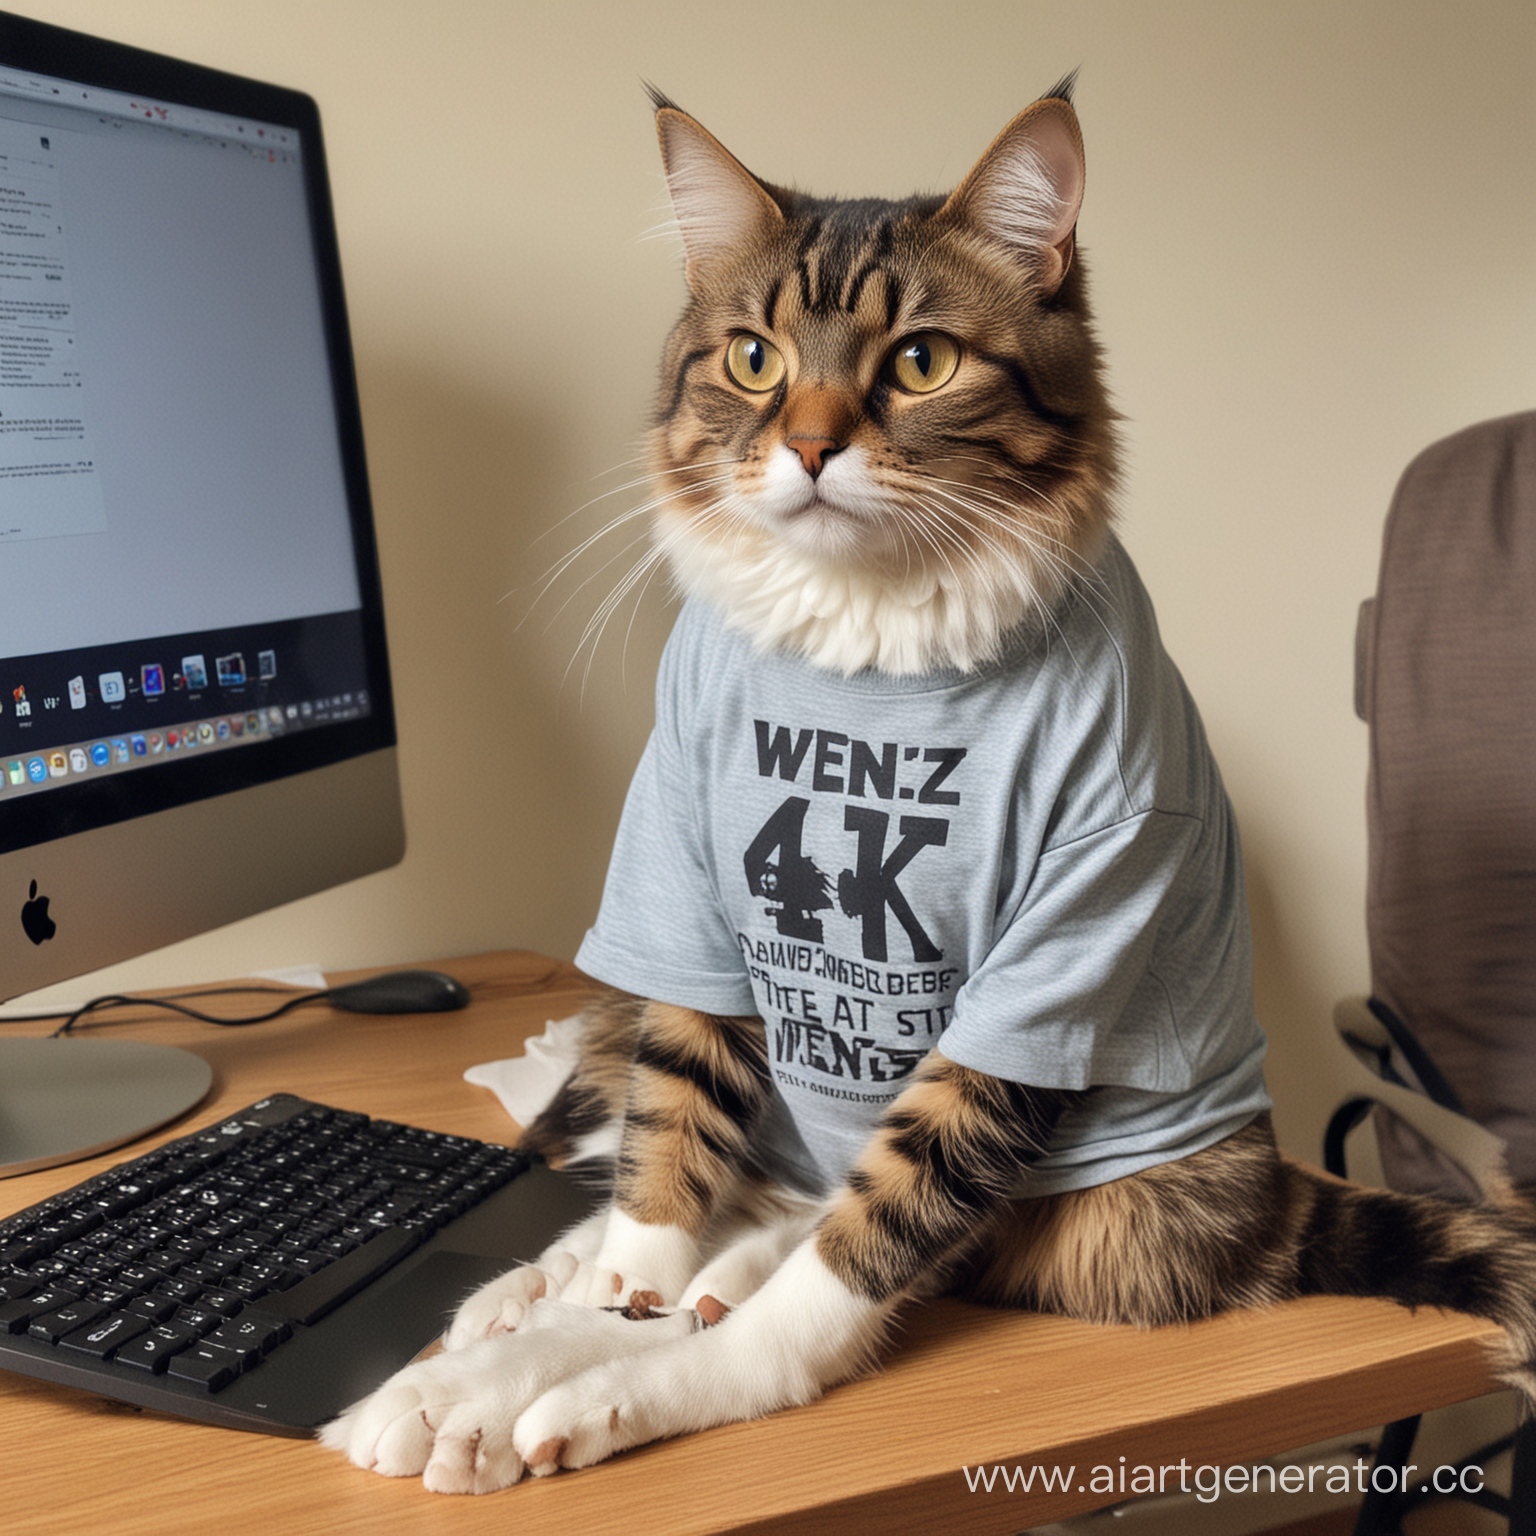 Кот сидит за компьютером, на майке кота написано Wenzz1k, 4к
